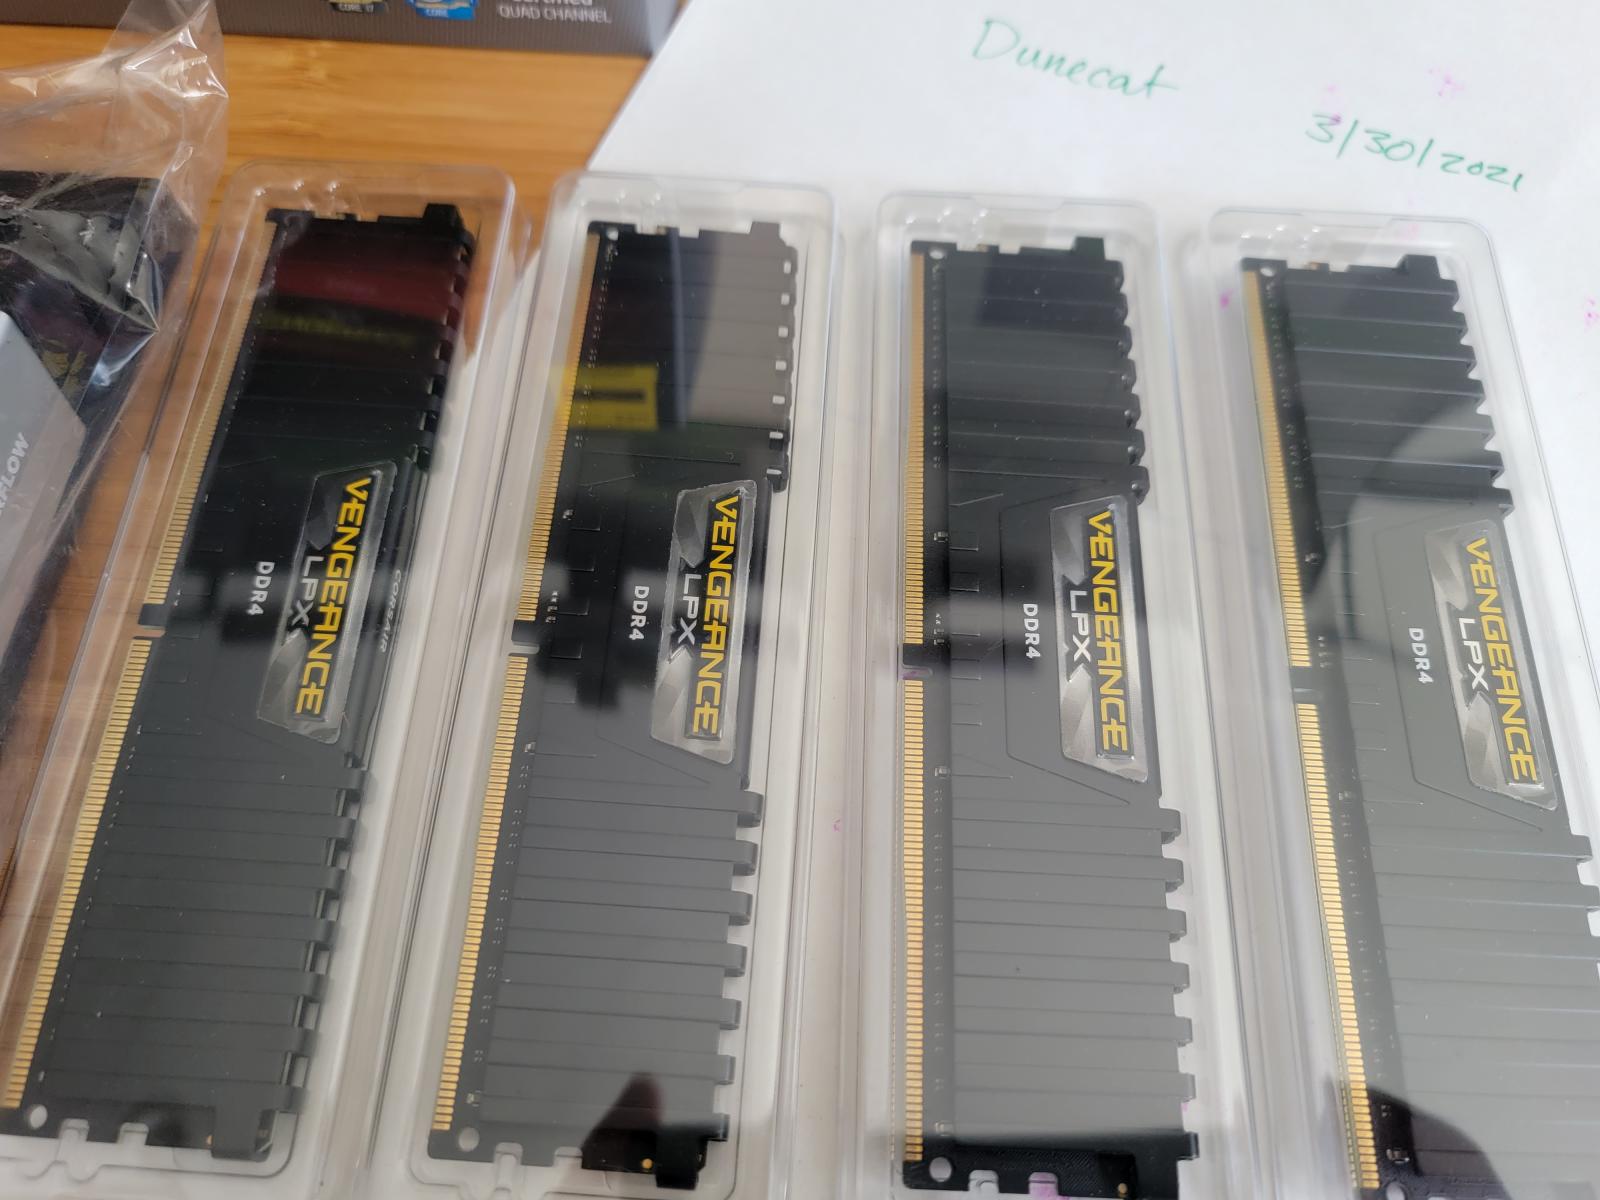 For sale Corsair Vengeance LPX & Airflow 64GB (4x16GB) DDR4 3200MHz RAM kit (B-die)